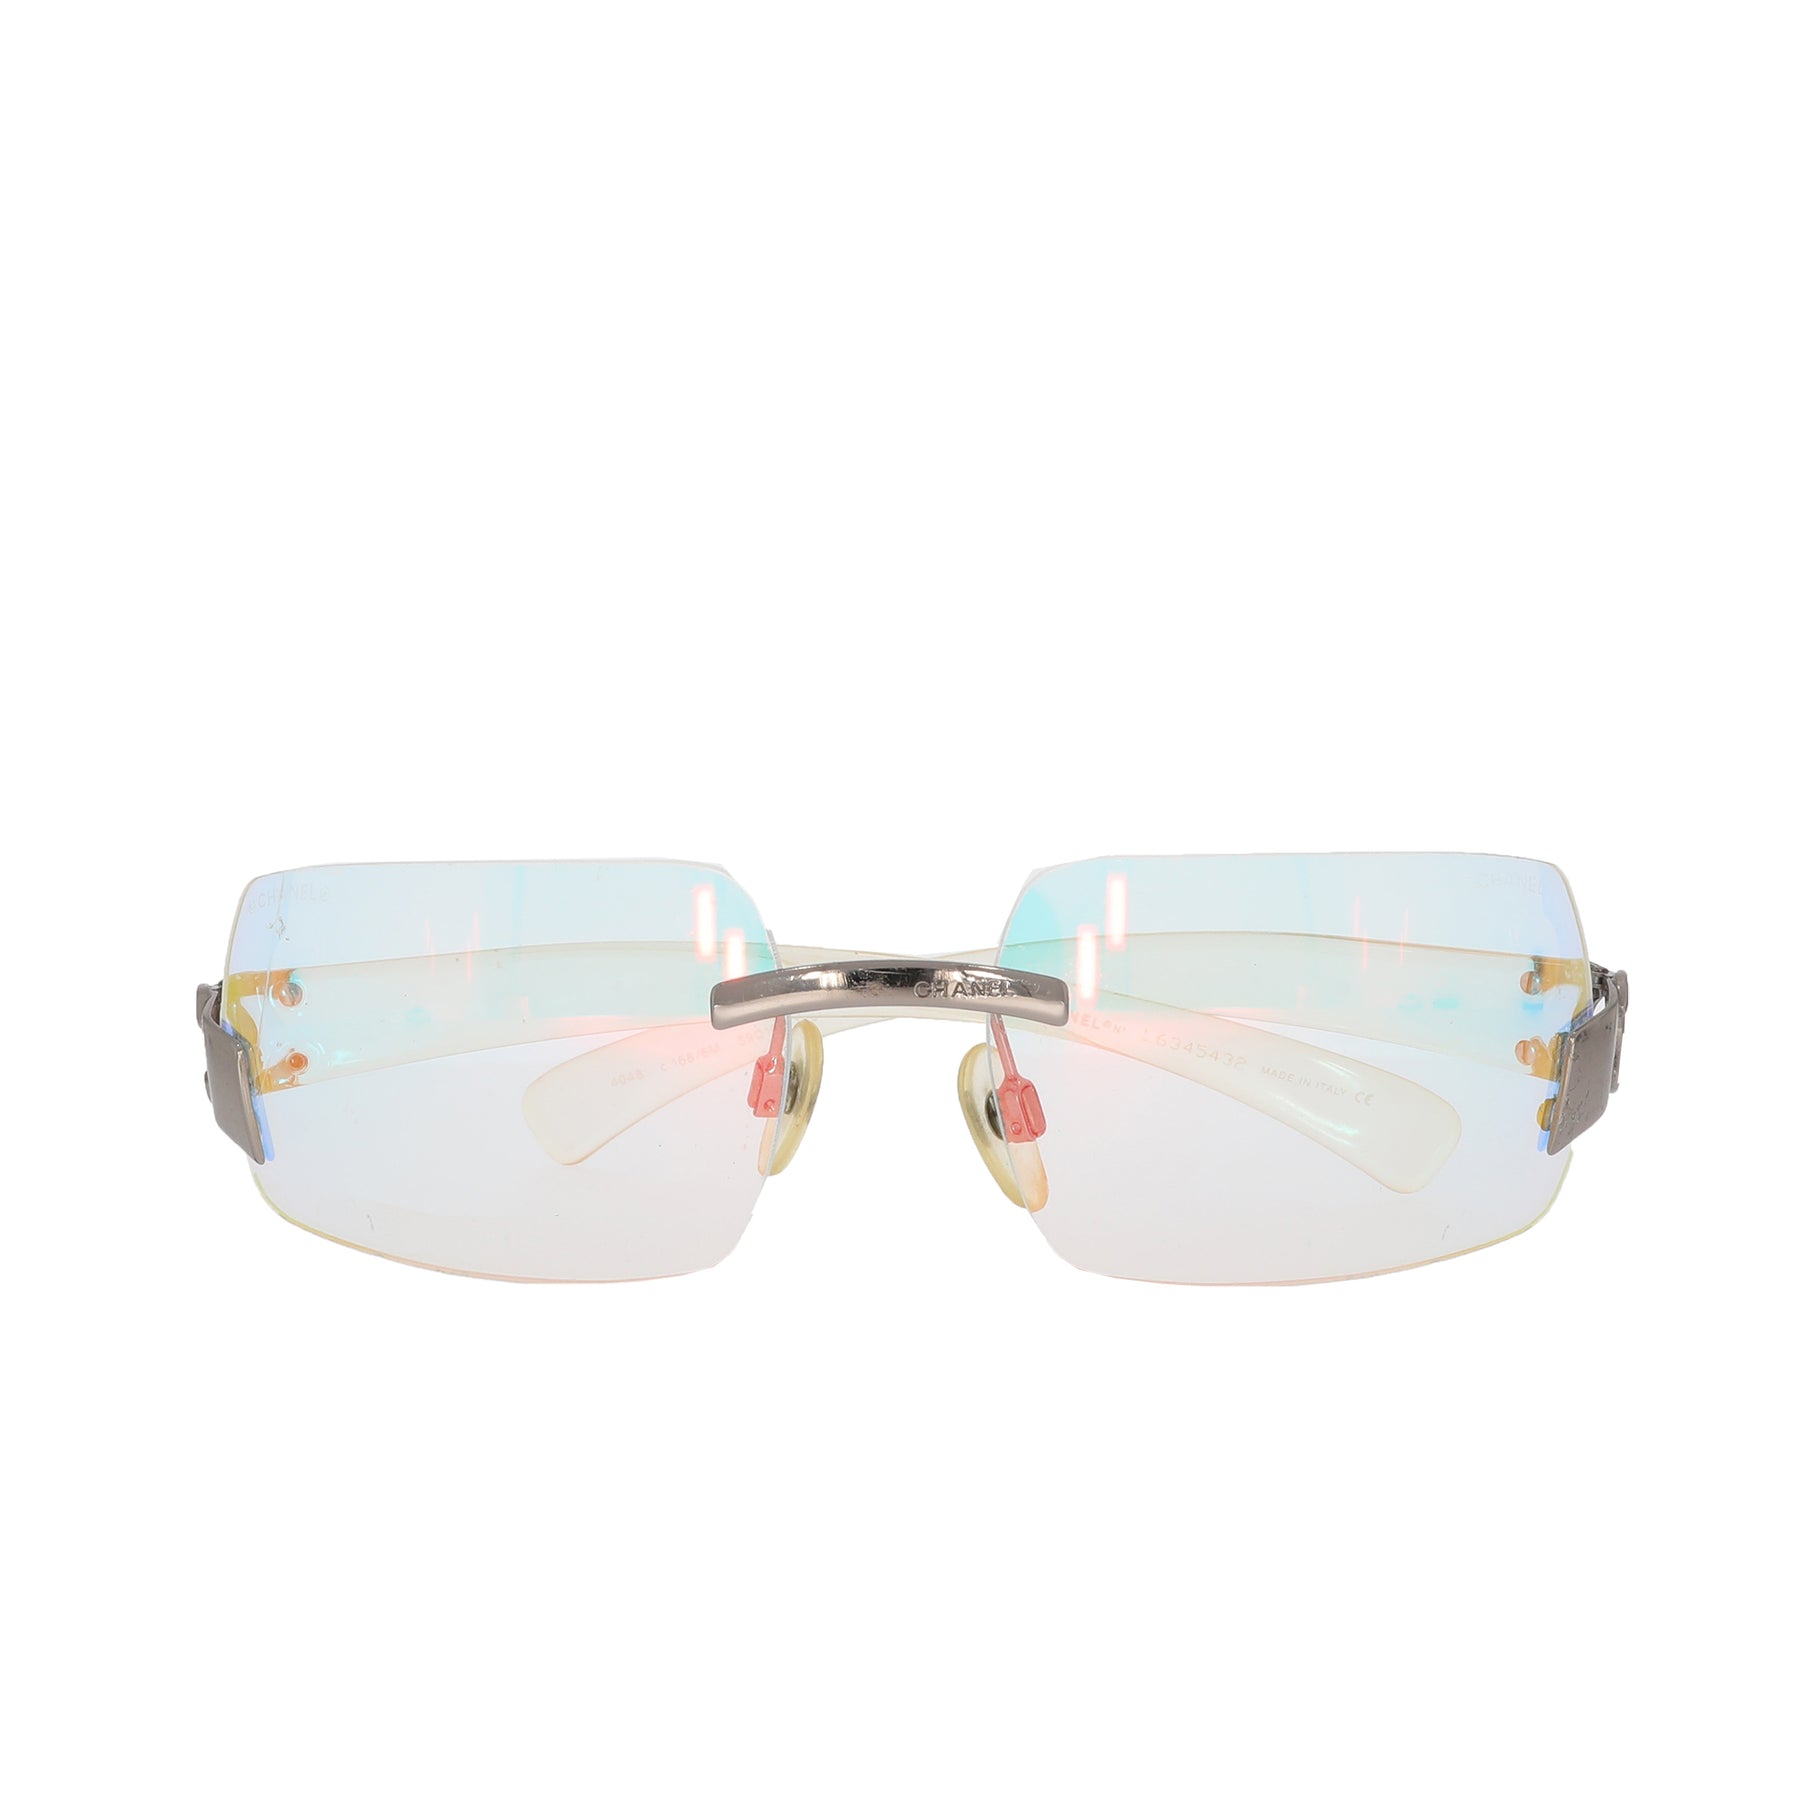 CHANEL Vintage Sunglasses 10513 Runaway Camera Lens Black amp Grey Eyewear  Glasses  eBay